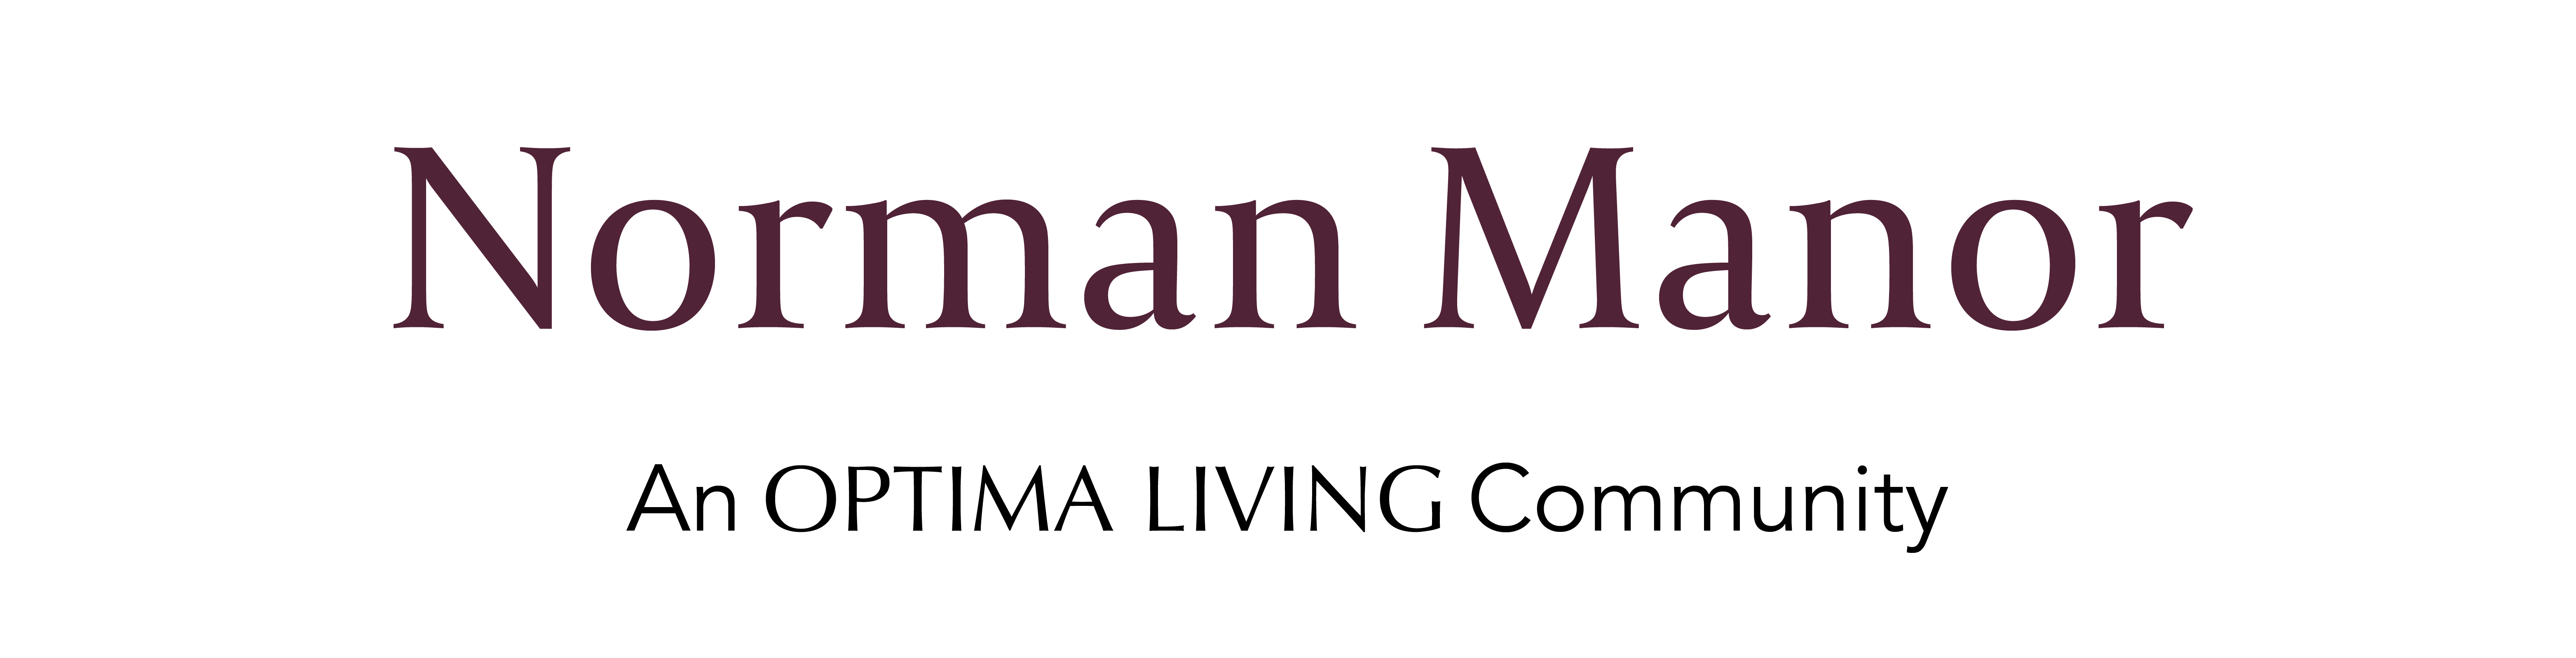 Norman Manor Logo